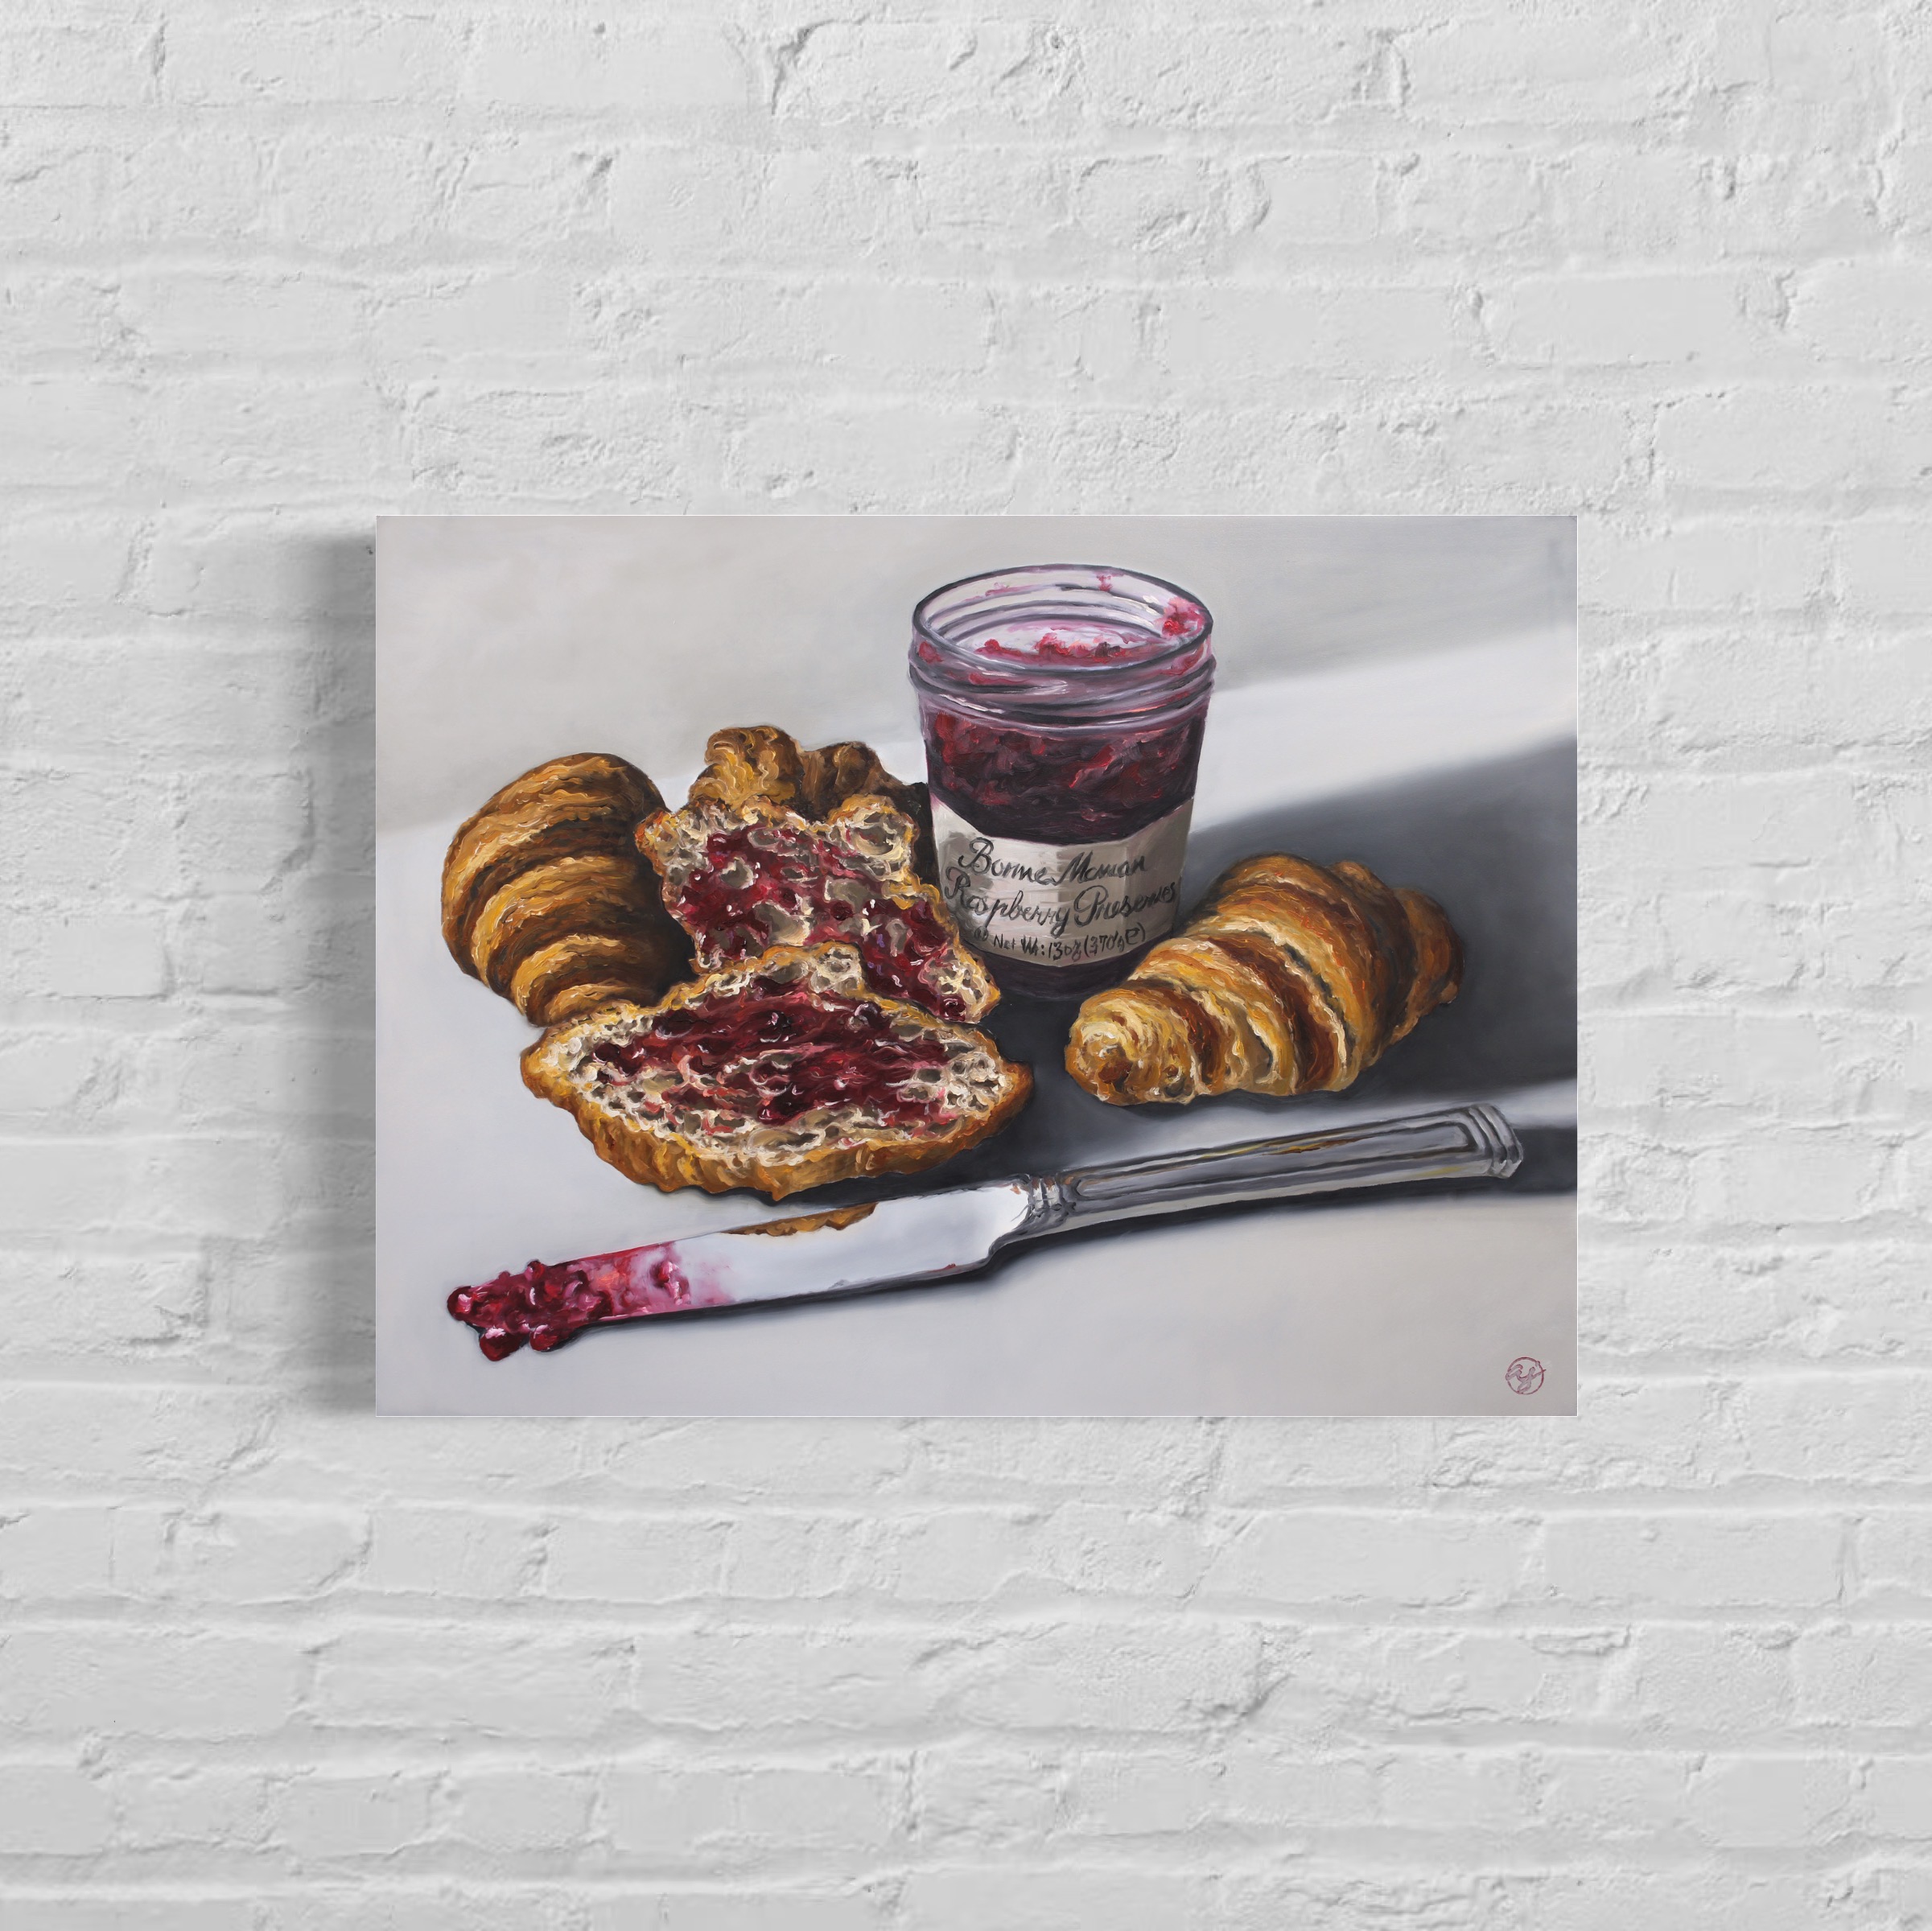 "Croissant & Jam" 18x24 Original Oil Painting by Abra Johnson